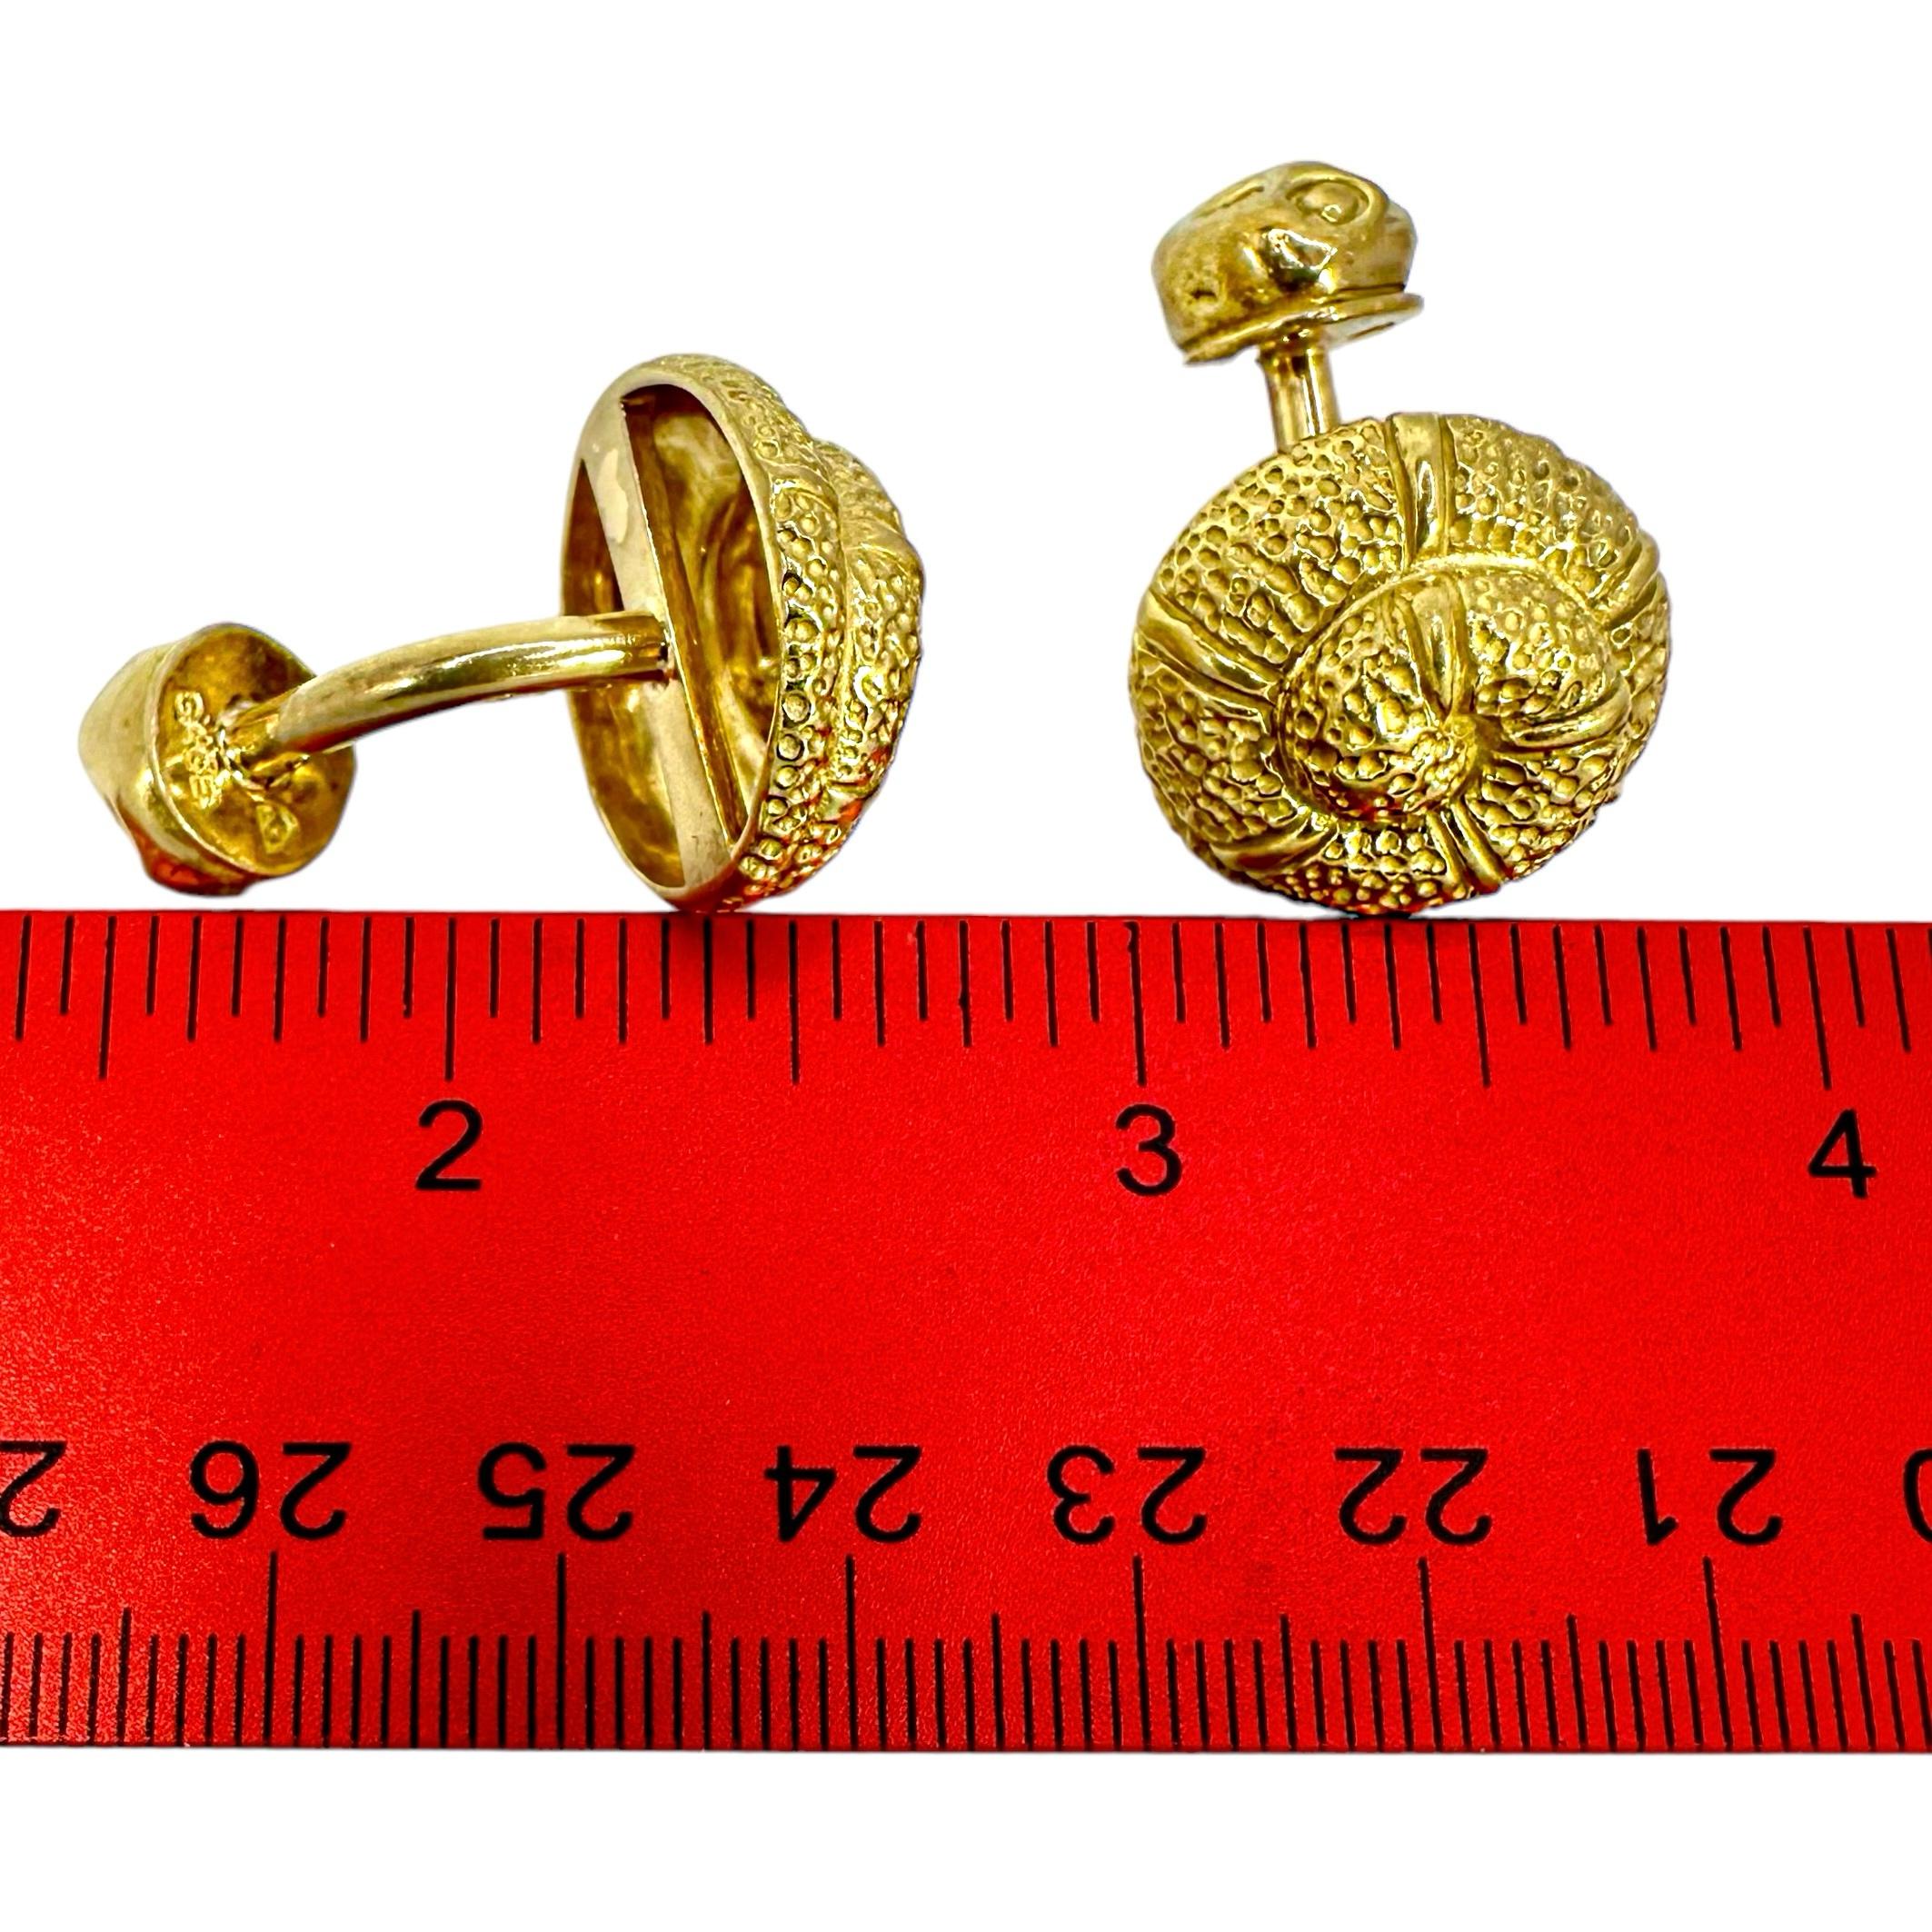 Elizabeth Gage 18K Yellow Gold Nautilus Motif Cufflinks 3/4 Inch Diameter 4